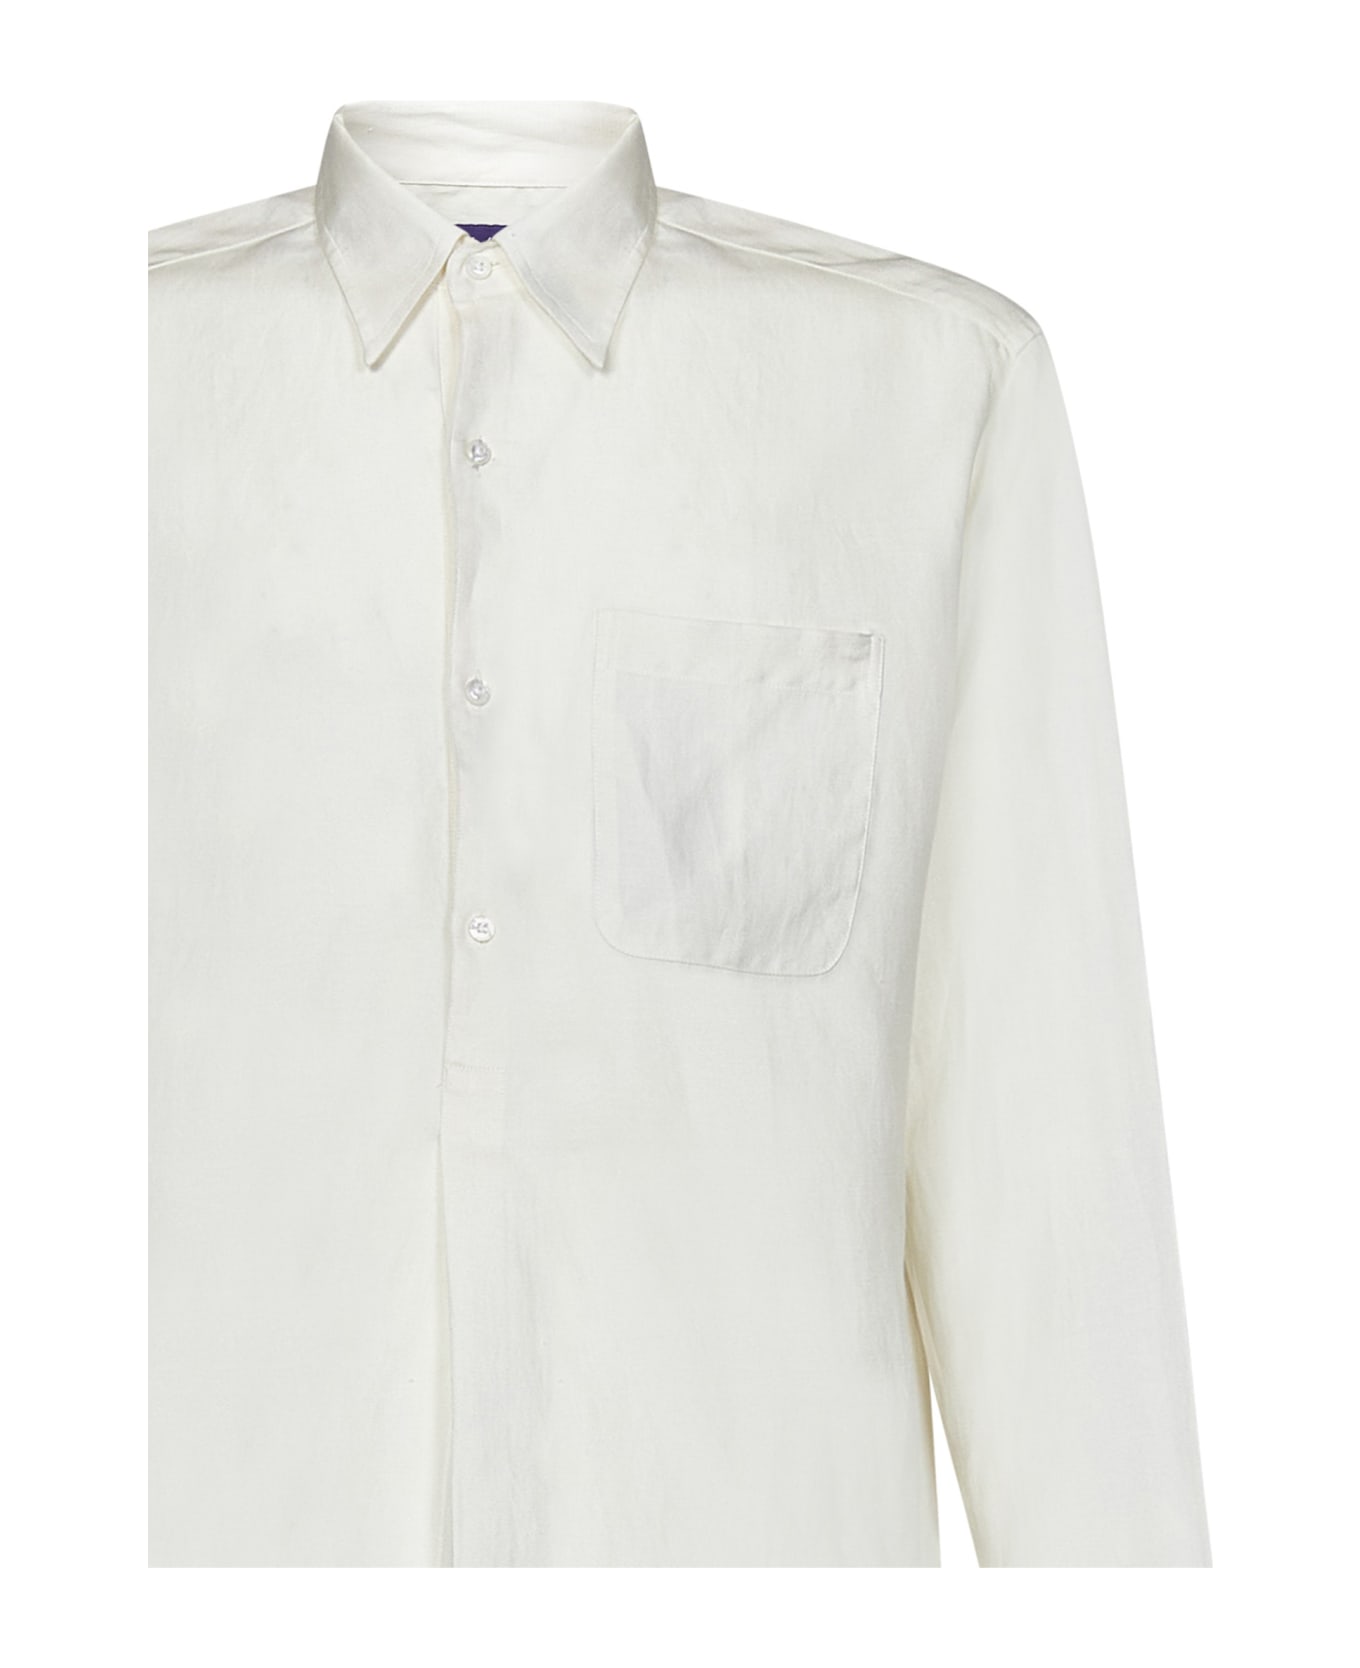 Ralph Lauren Shirt - White